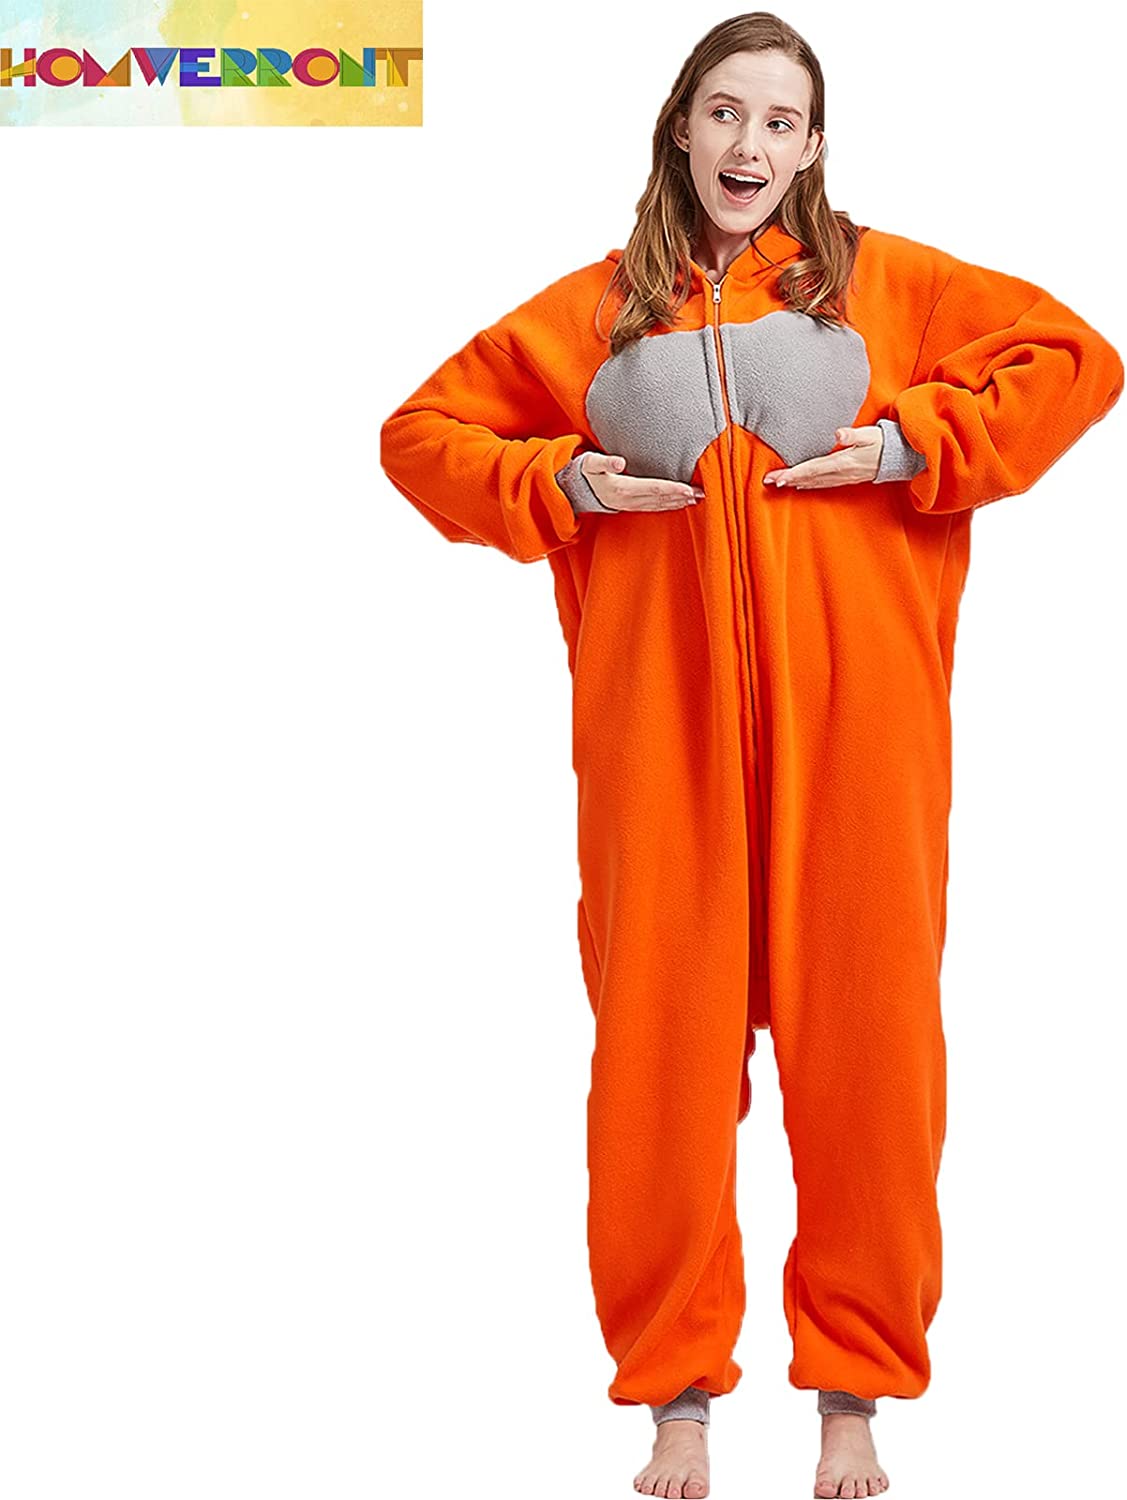 Orangutan Onesie Pajamas Animal Cosplay Costume for adults